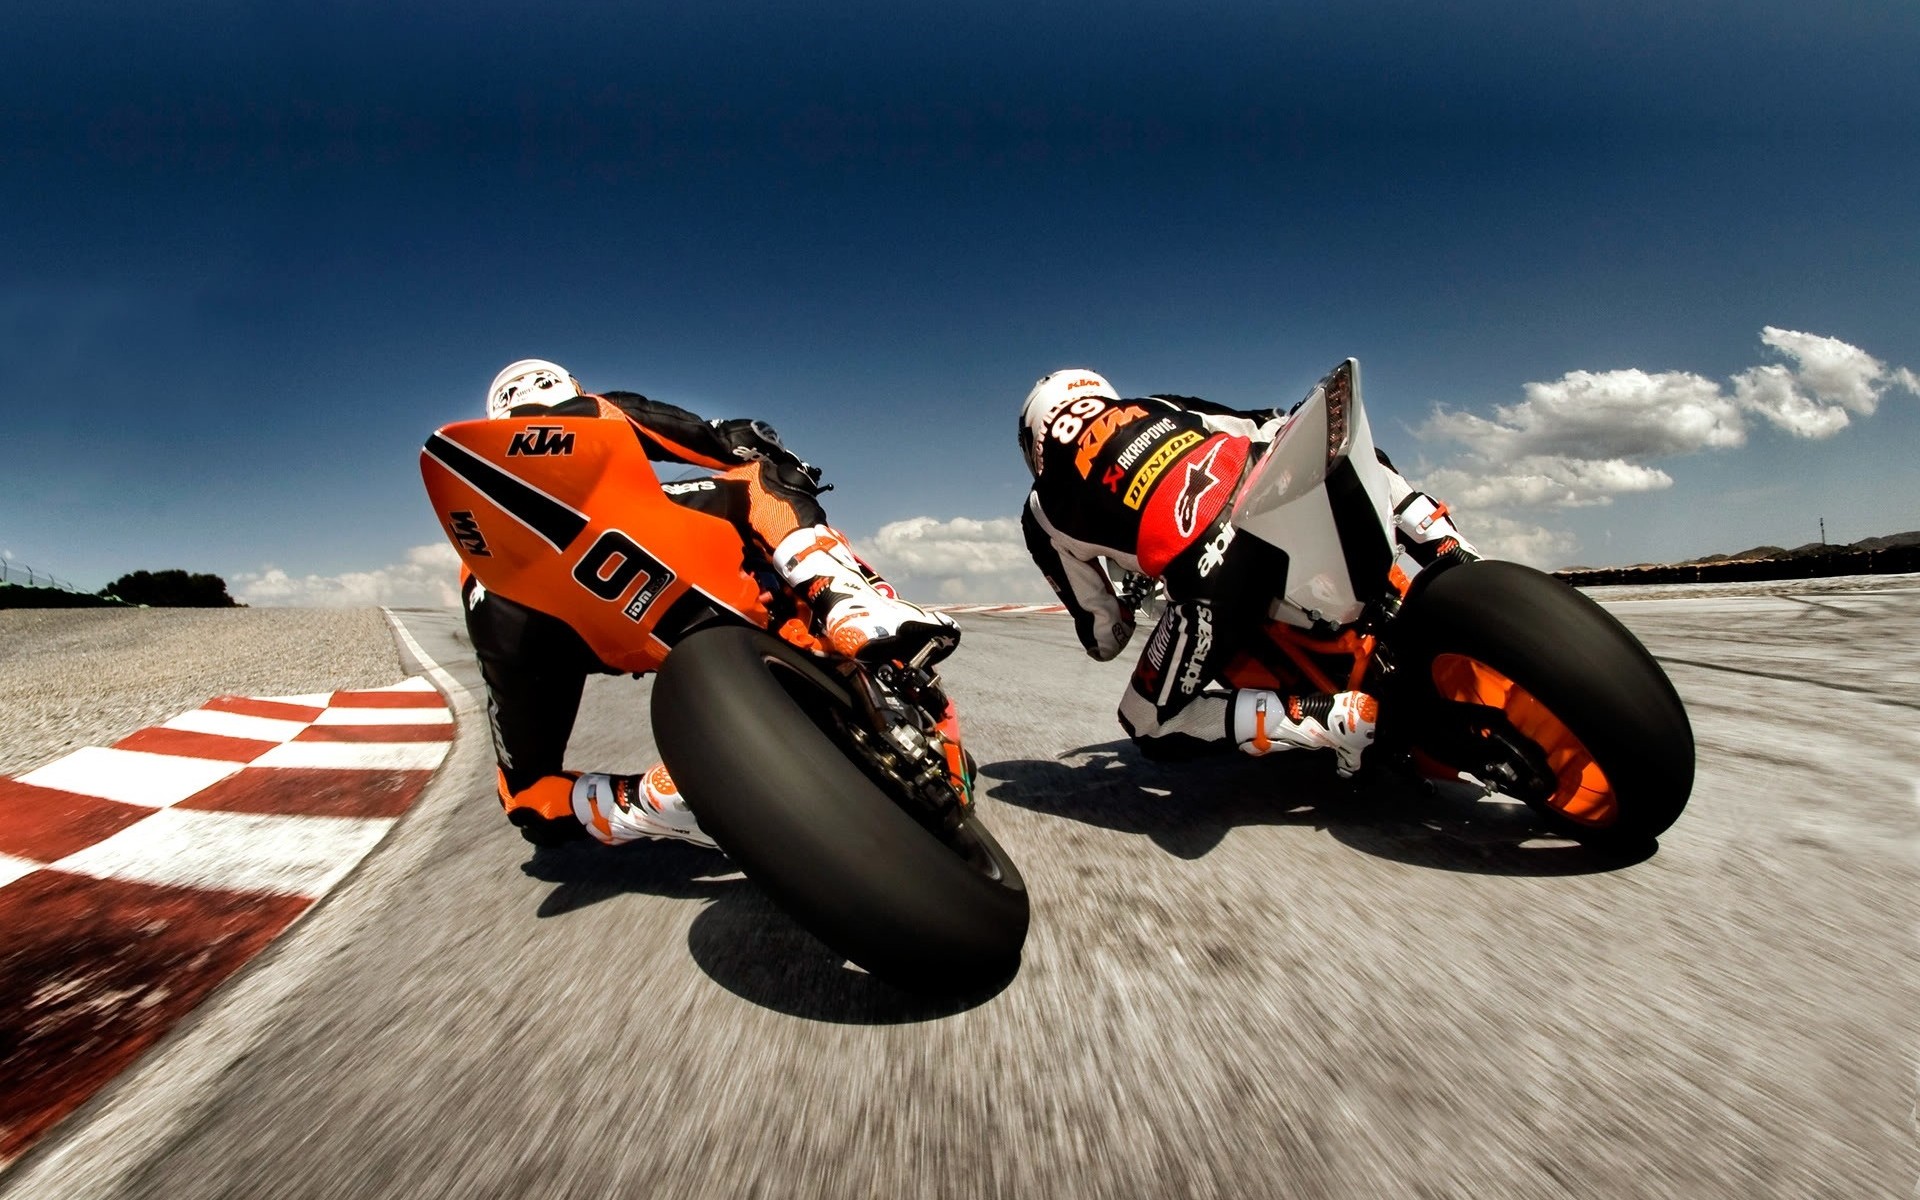 23 Ducati V4 Superbike Images, Stock Photos & Vectors | Shutterstock